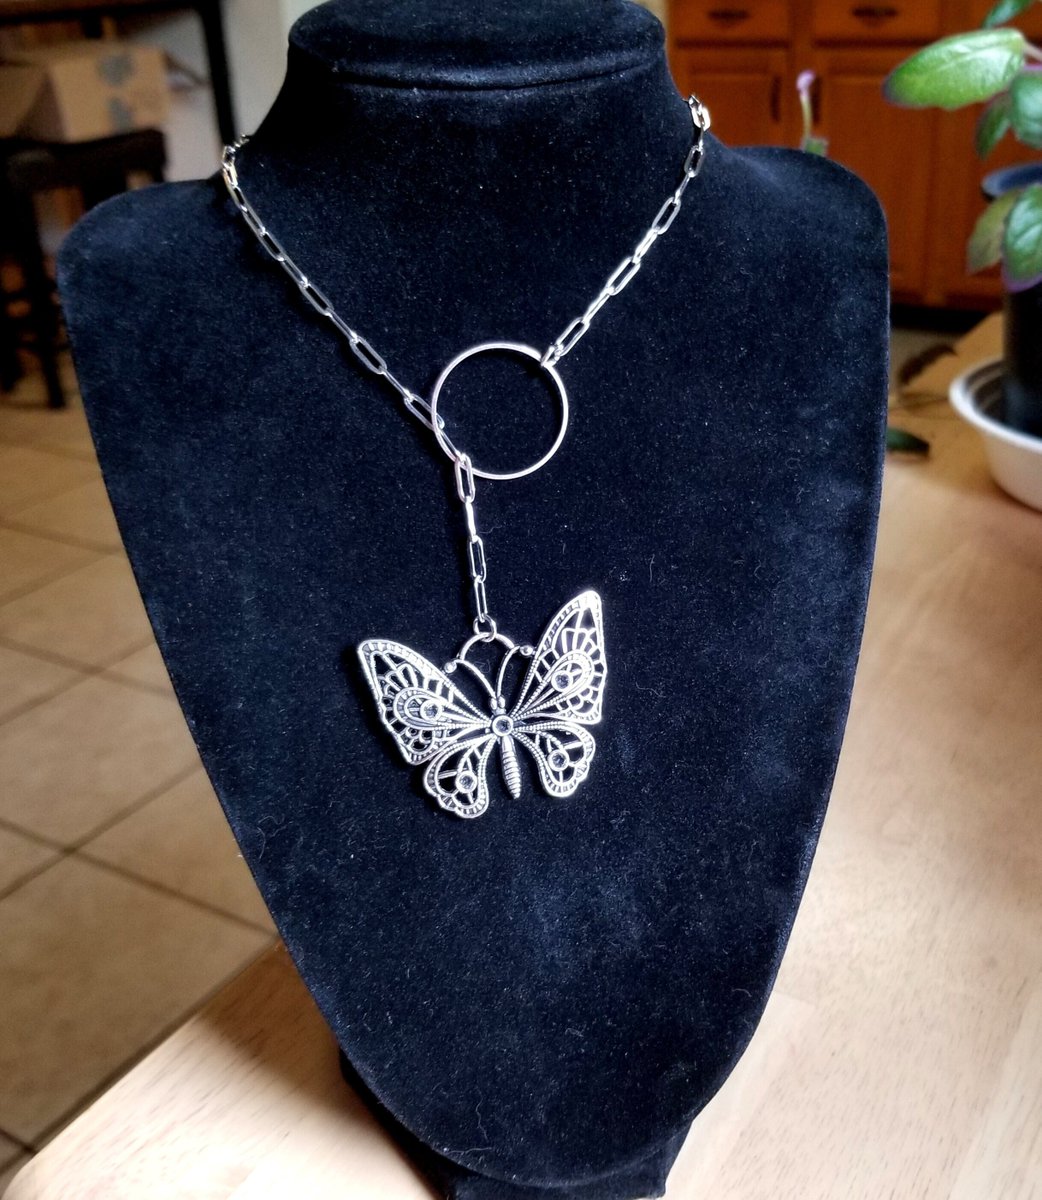 Butterfly Lariat Necklace, Paperclip Chain Necklace #butterfly #butterflies #butterflyjewelry #butterflynecklace #cottagecore #bohemian #boho #bohostyle #bohemianjewelry #giftsforher #lariatnecklace #Paperclipchain #handmadejewelry #Etsy 

 etsy.me/3TYRQKr via @Etsy